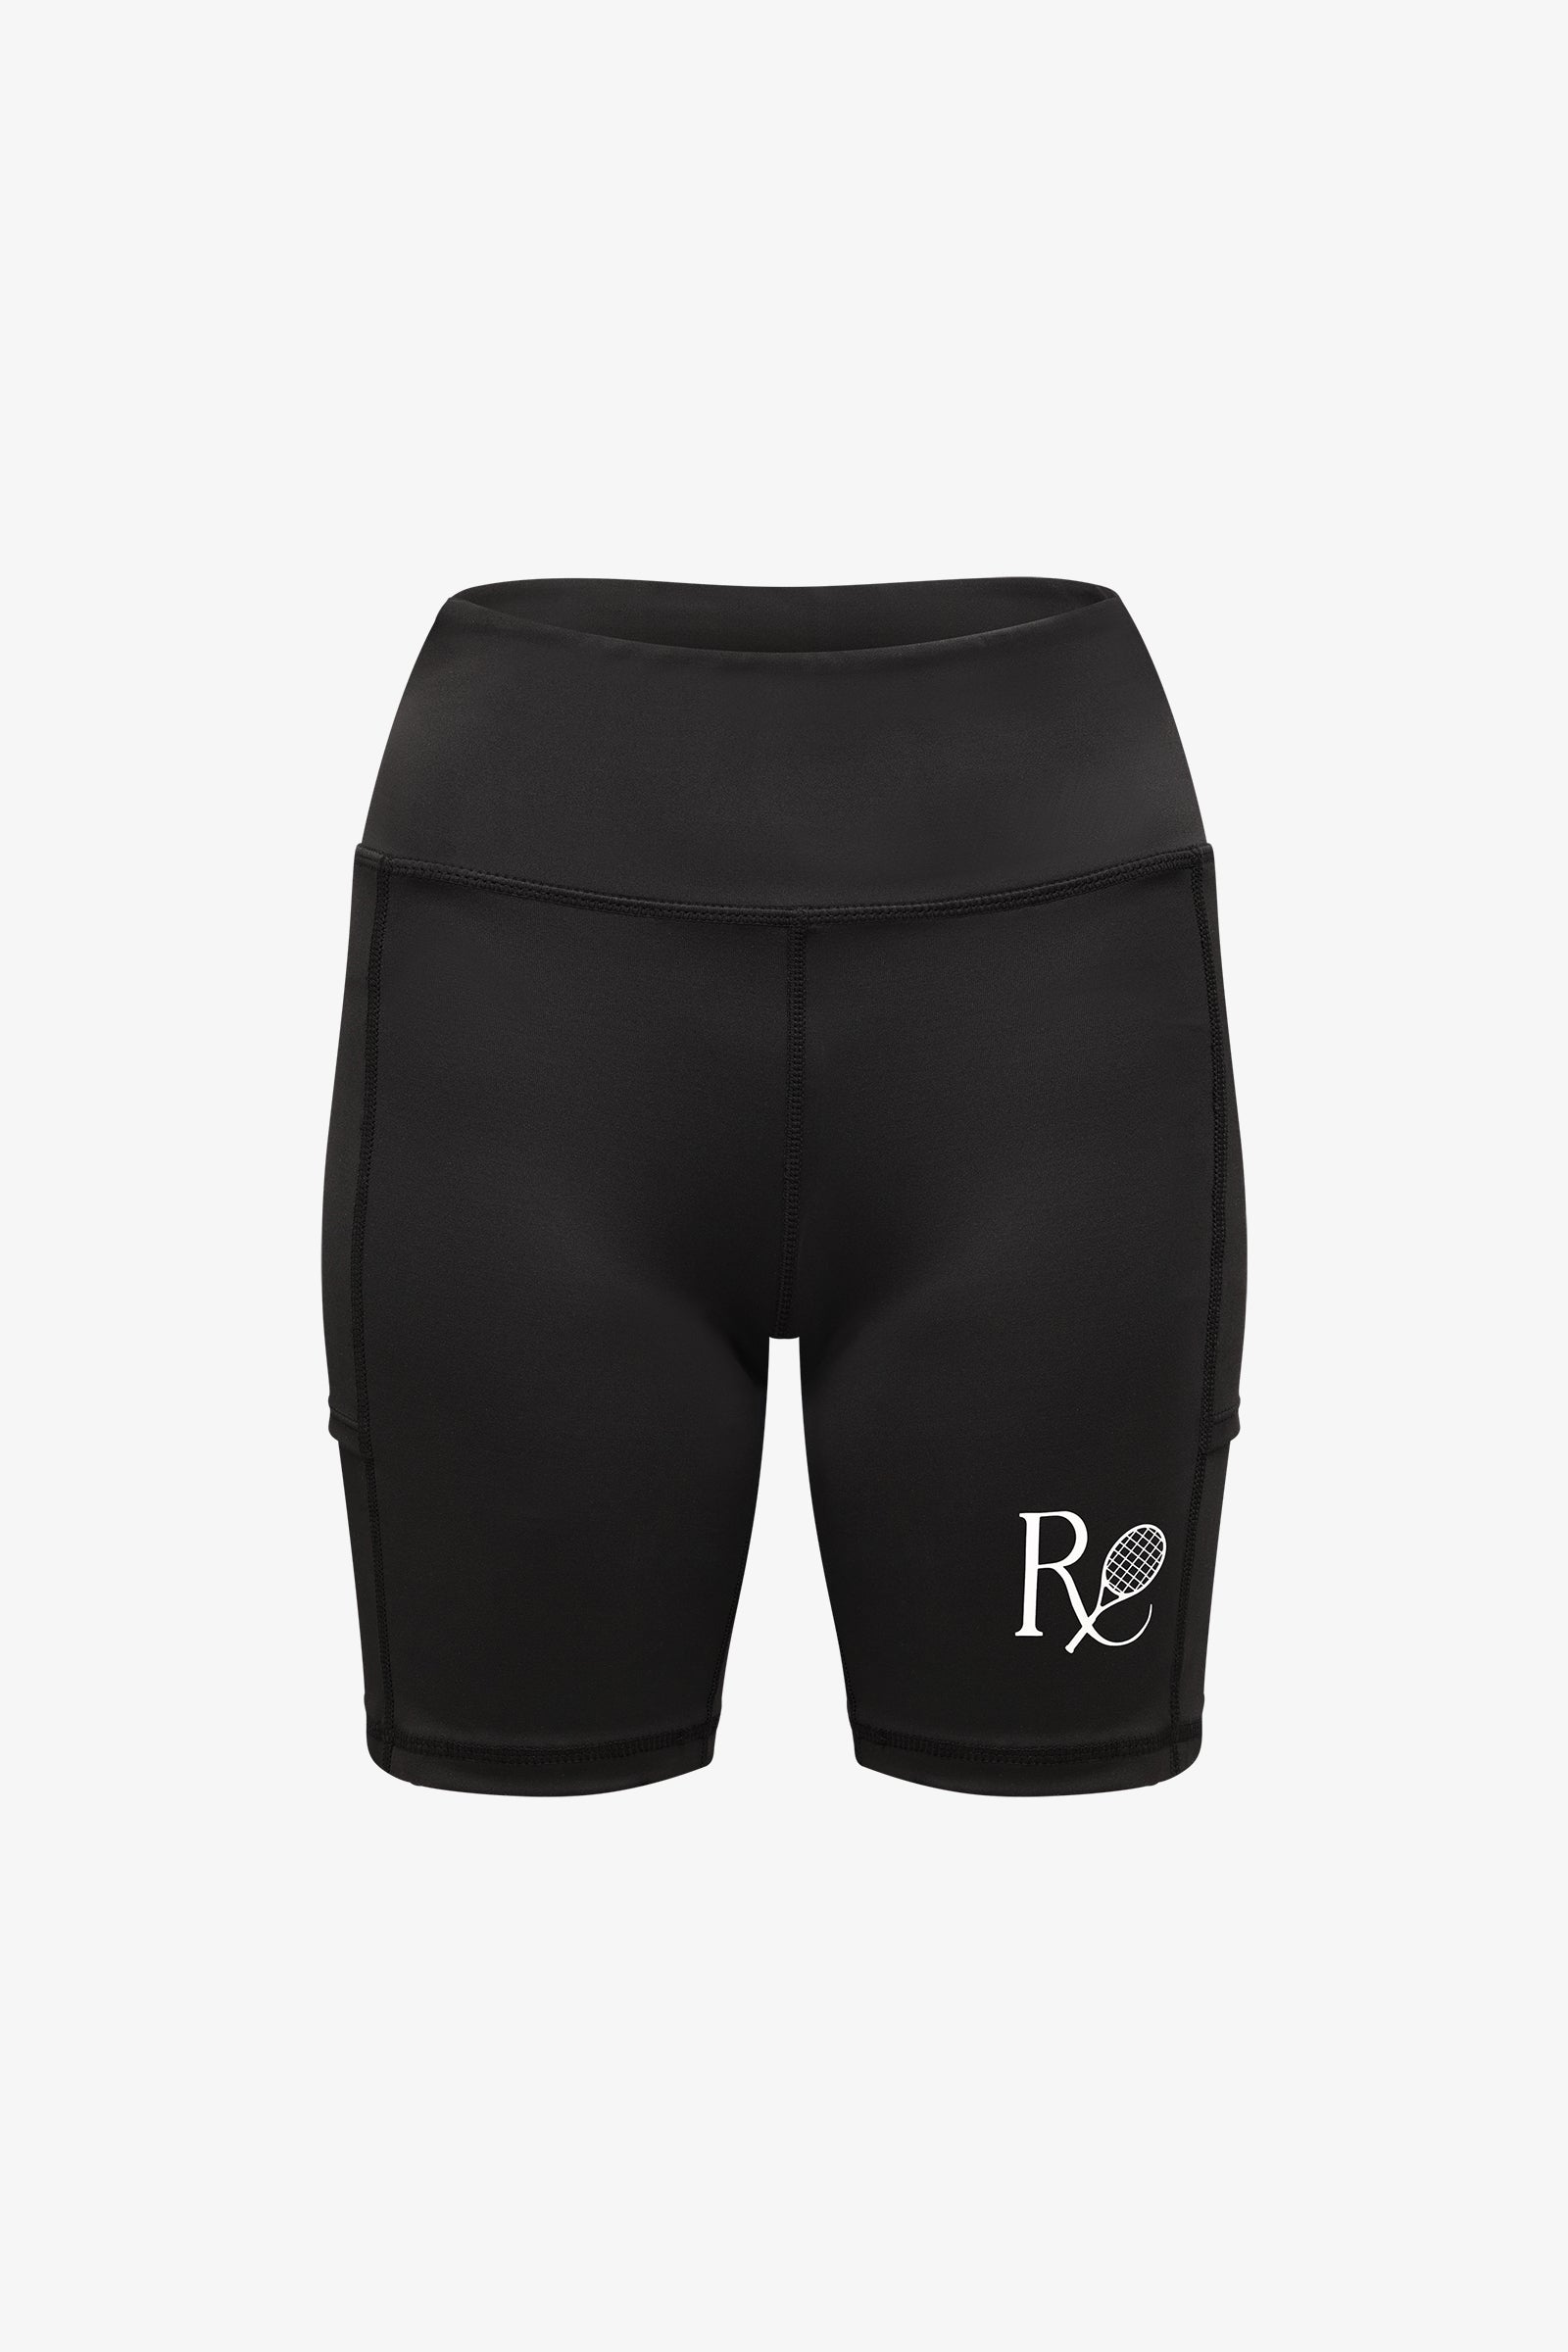 Ball Pocket Biker Shorts / Black